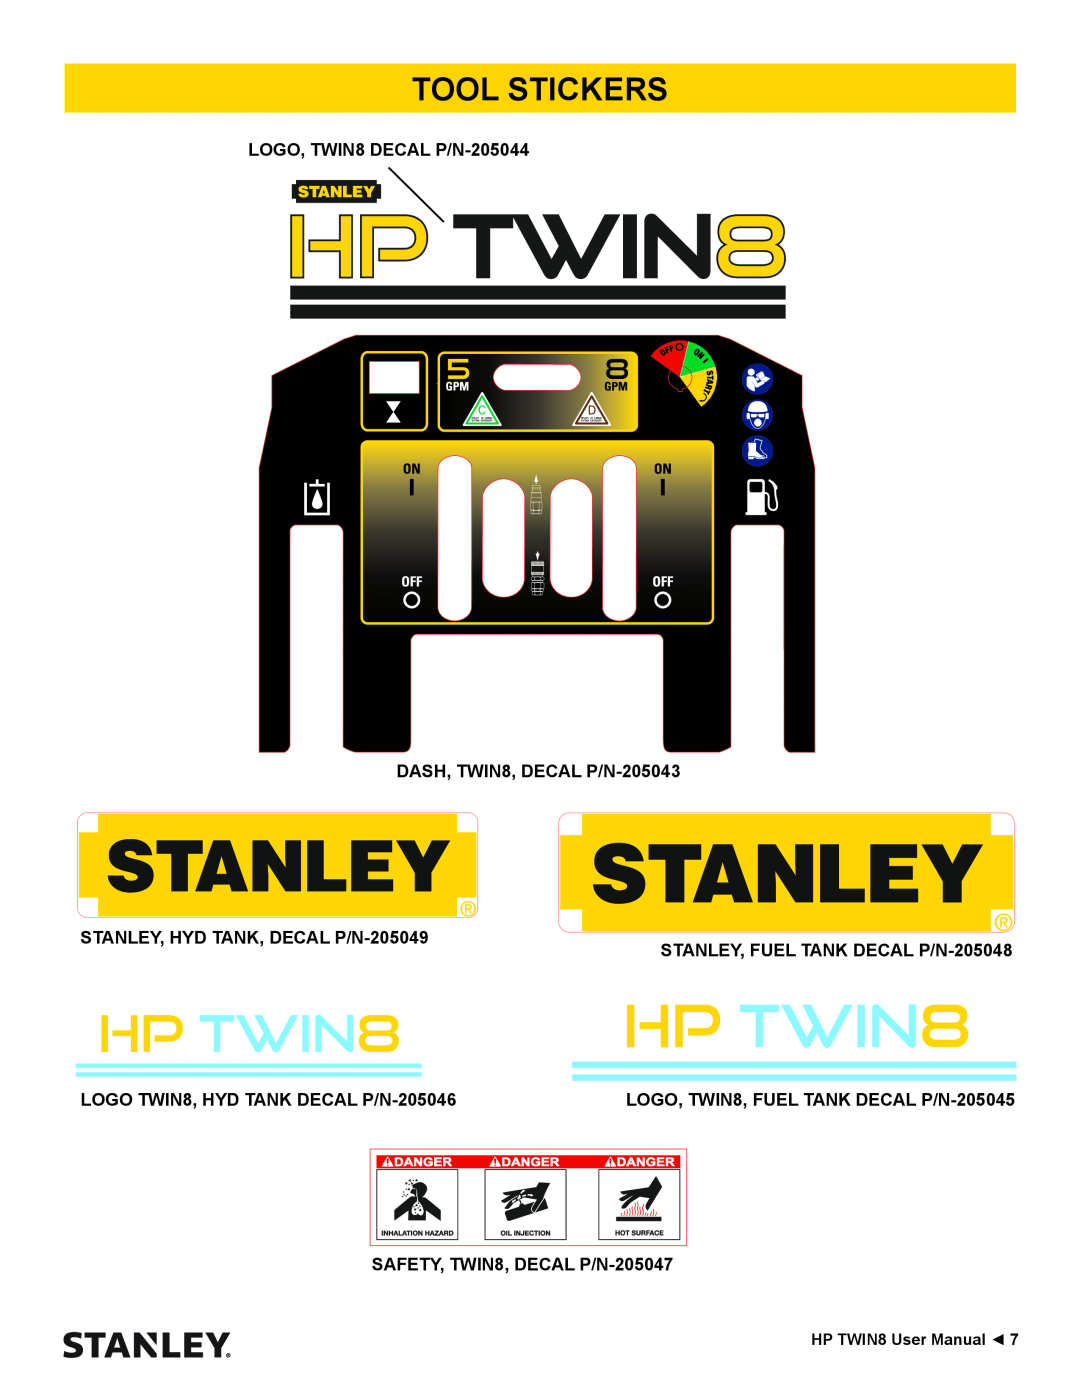 Stanley Black & Decker HP TWIN8 manual Tool Stickers, LOGO, TWIN8 DECAL P/N-205044 DASH, TWIN8, DECAL P/N-205043 